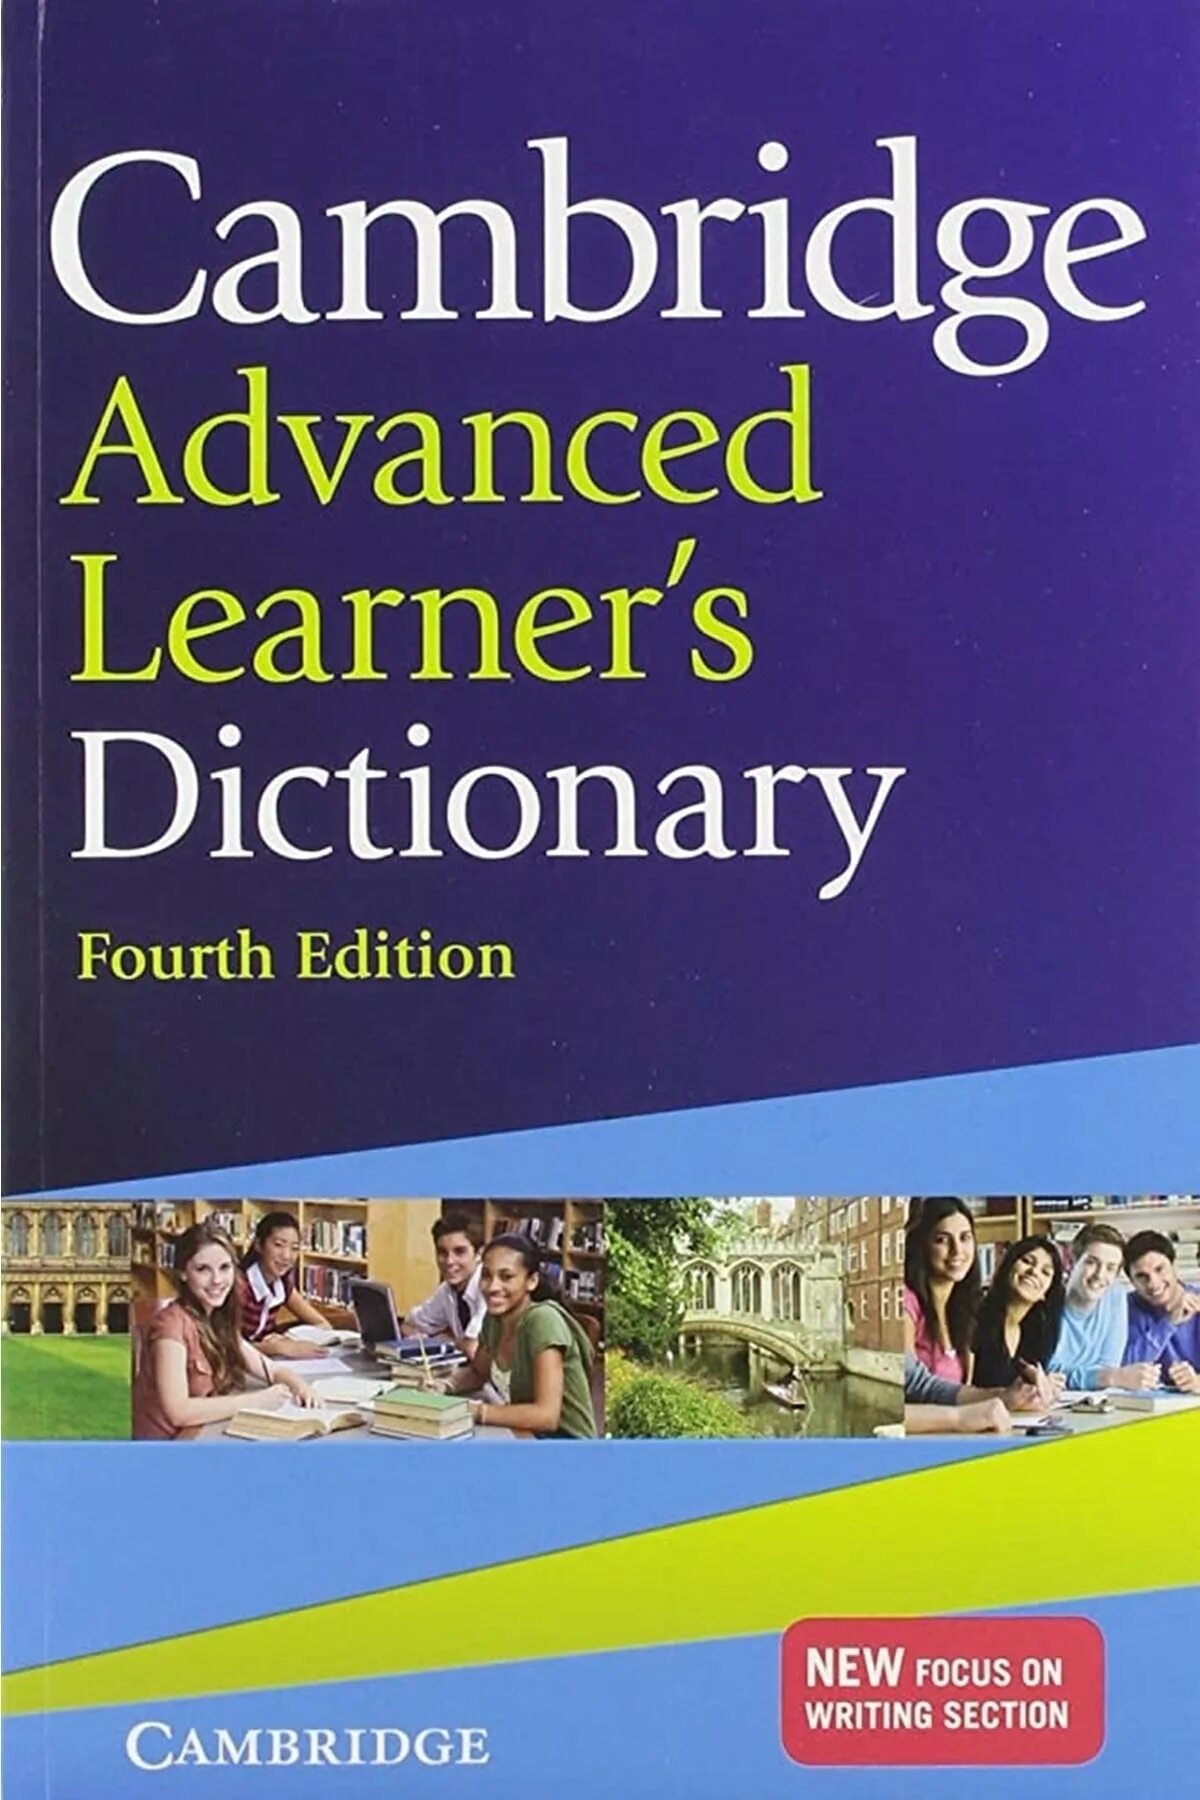 Кембриджский словарь. Cambridge Dictionary. Cambridge Advanced Learner s Dictionary. Словарь Cambridge Dictionary. Cambridge Advanced Learner's Dictionary книга.